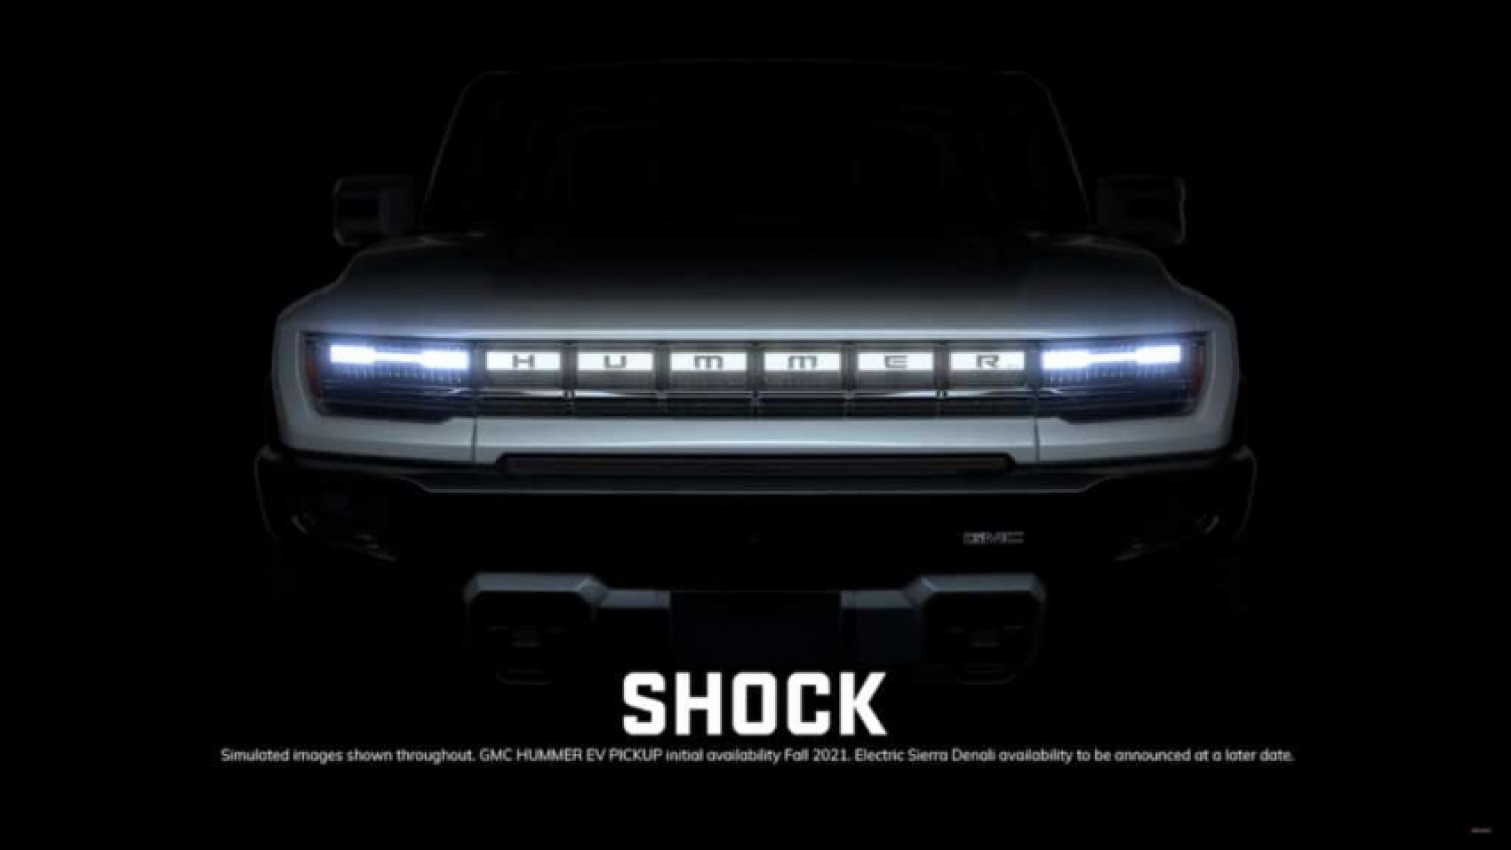 autos, gmc, news, gmc electric sierra denali set to become truck brand’s second battery pickup